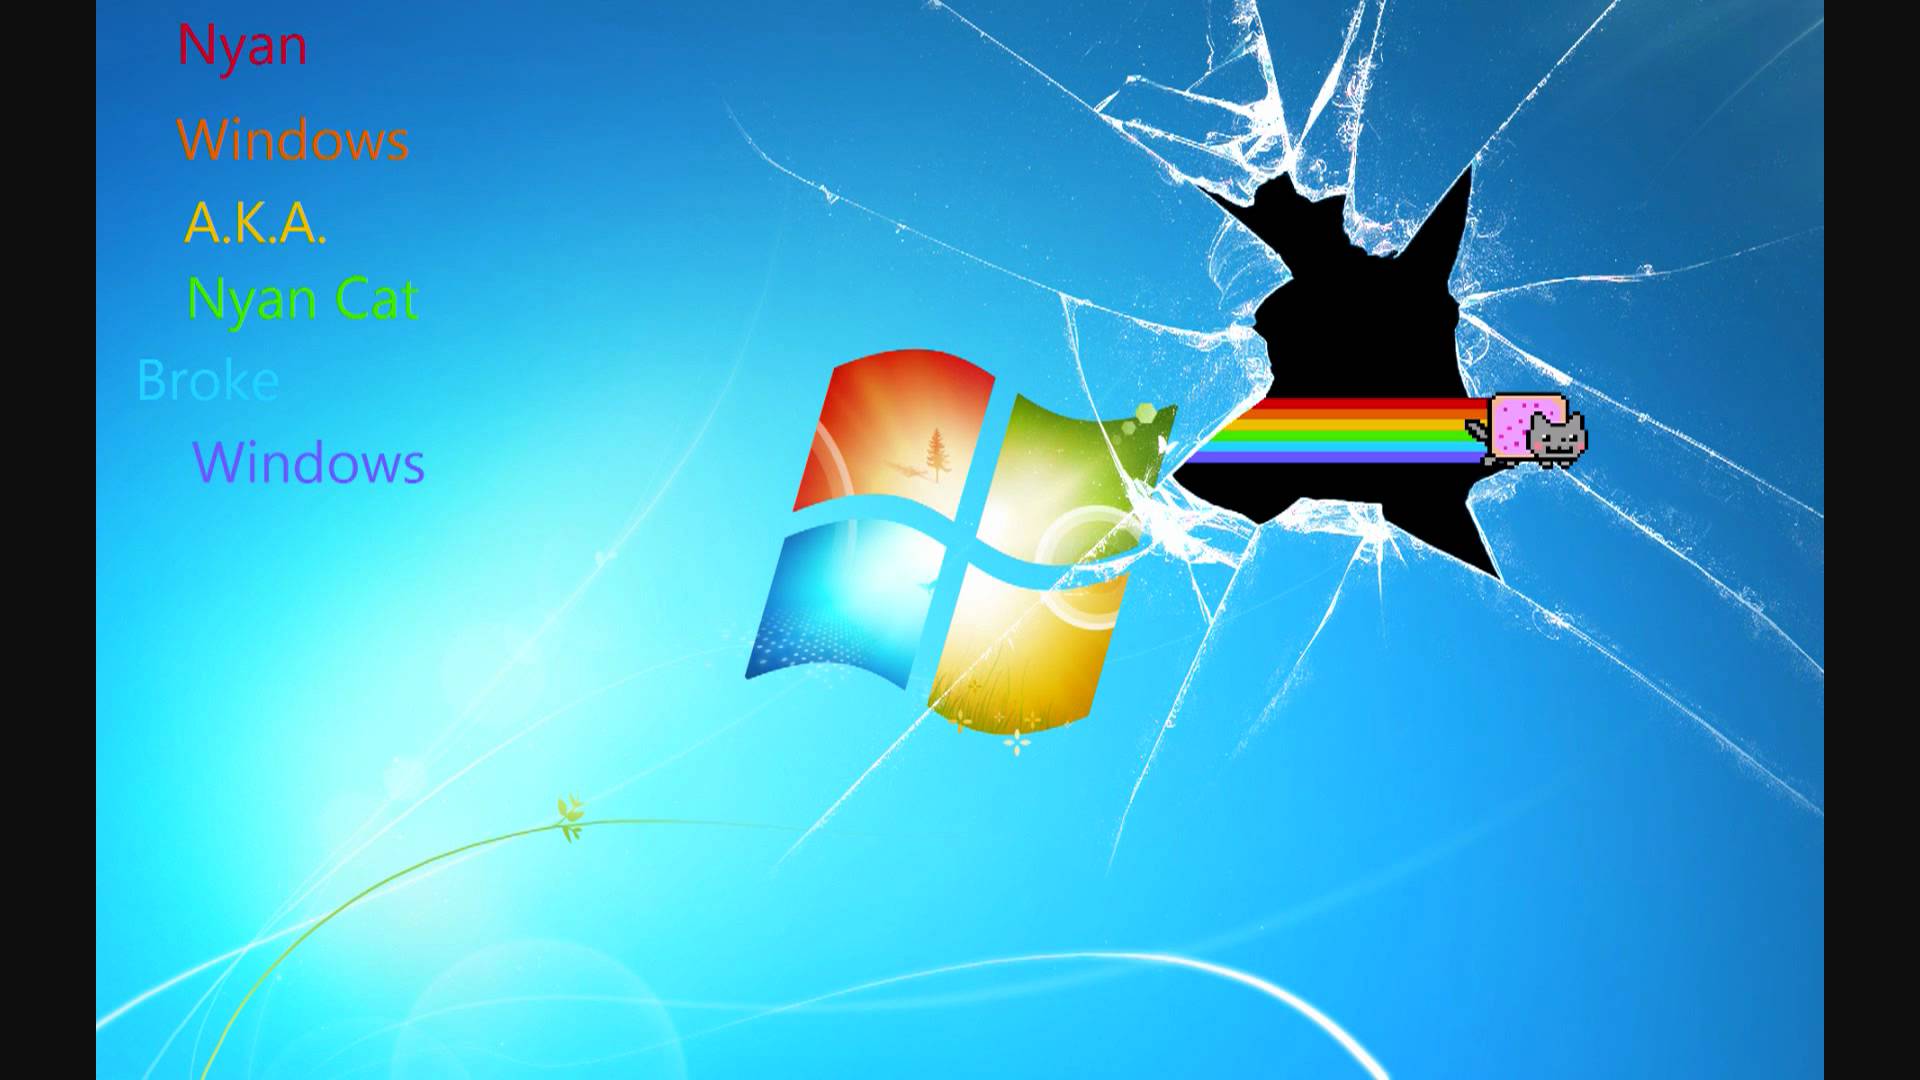 Nyan Windows 7 AKA Nyan Cat Broke Windows - YouTube